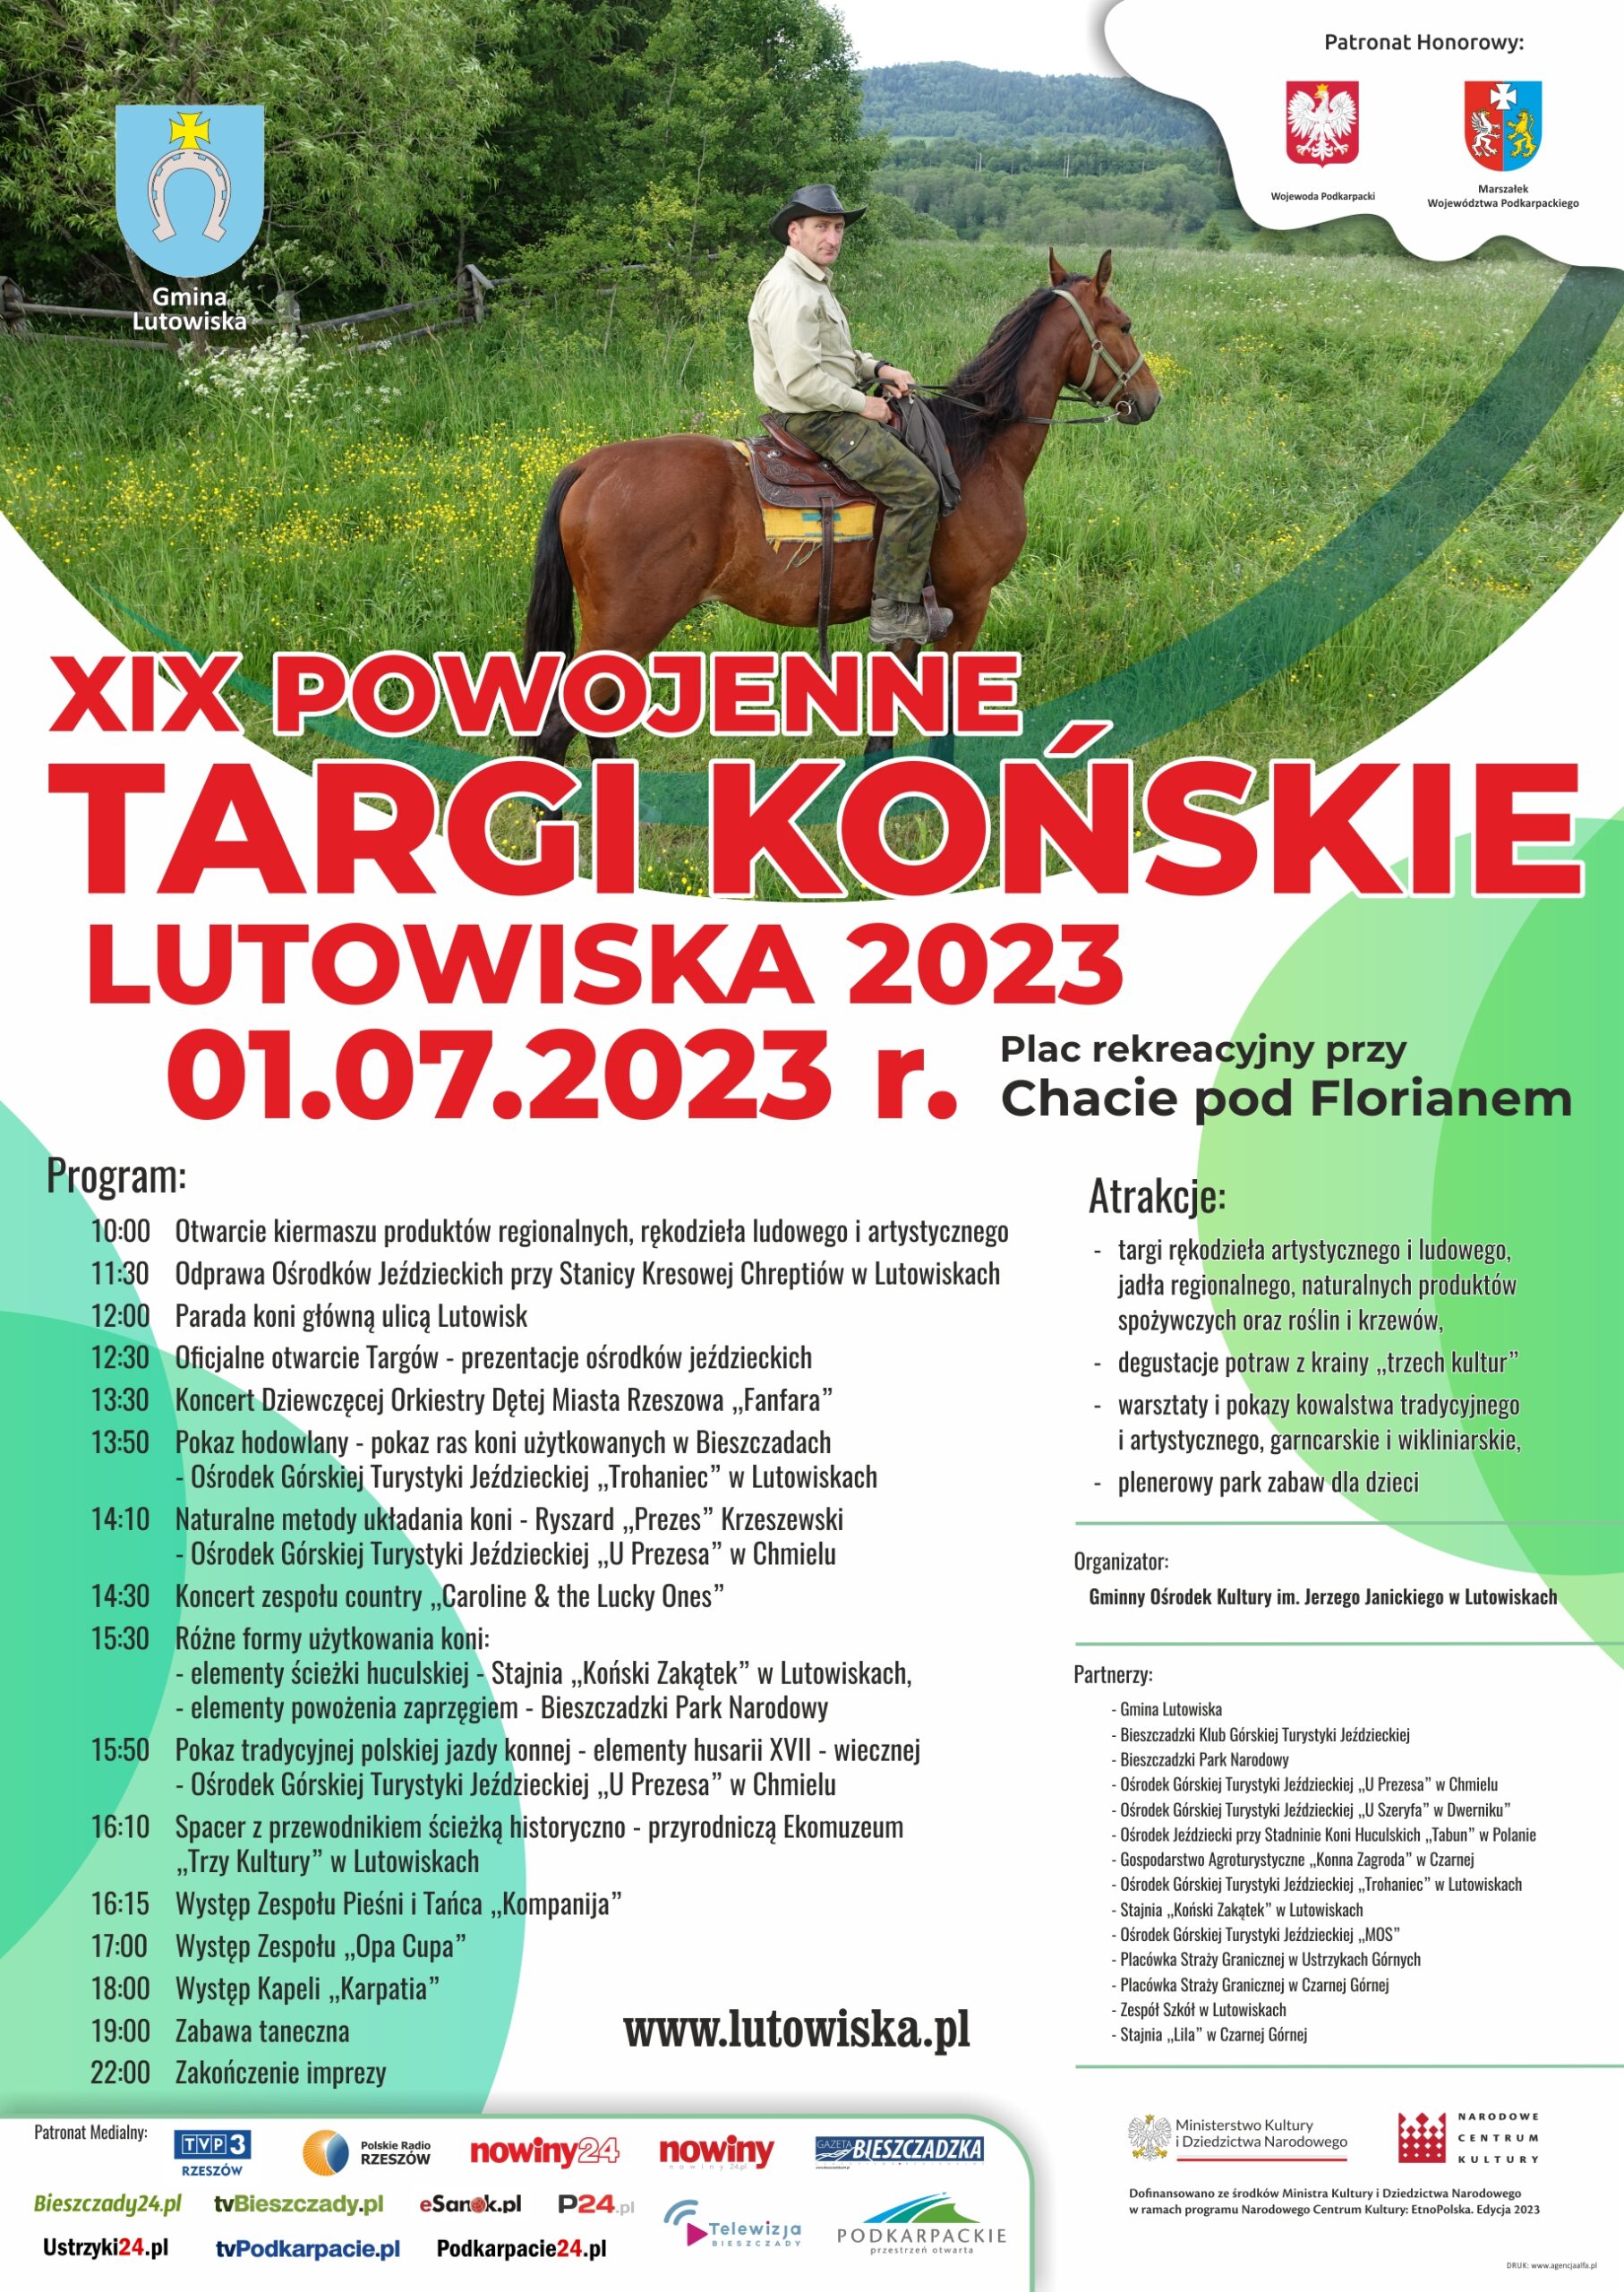 PLAKAT XIX POWOJENNE TARGI KONSKIE LUTOWISKA 2023 scaled